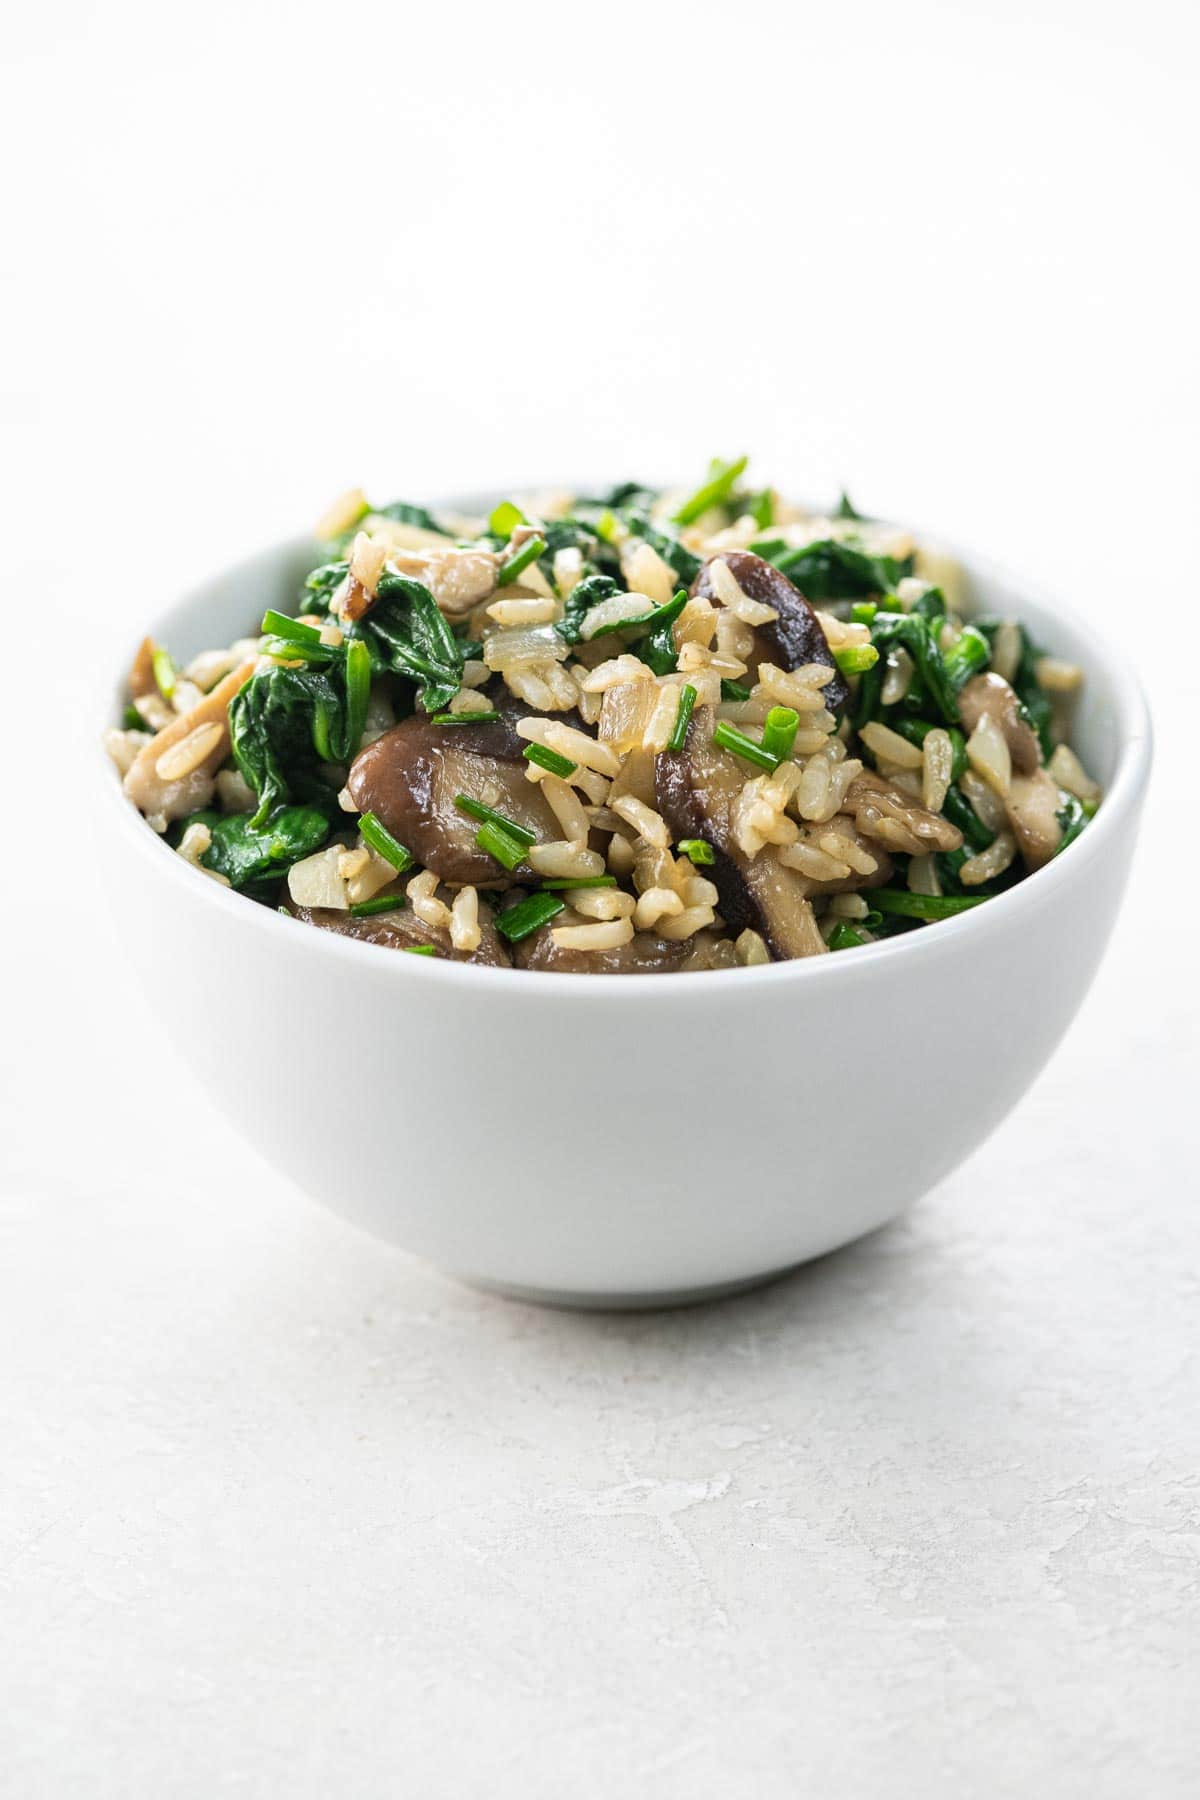 Spinach and mushroom rice bowl